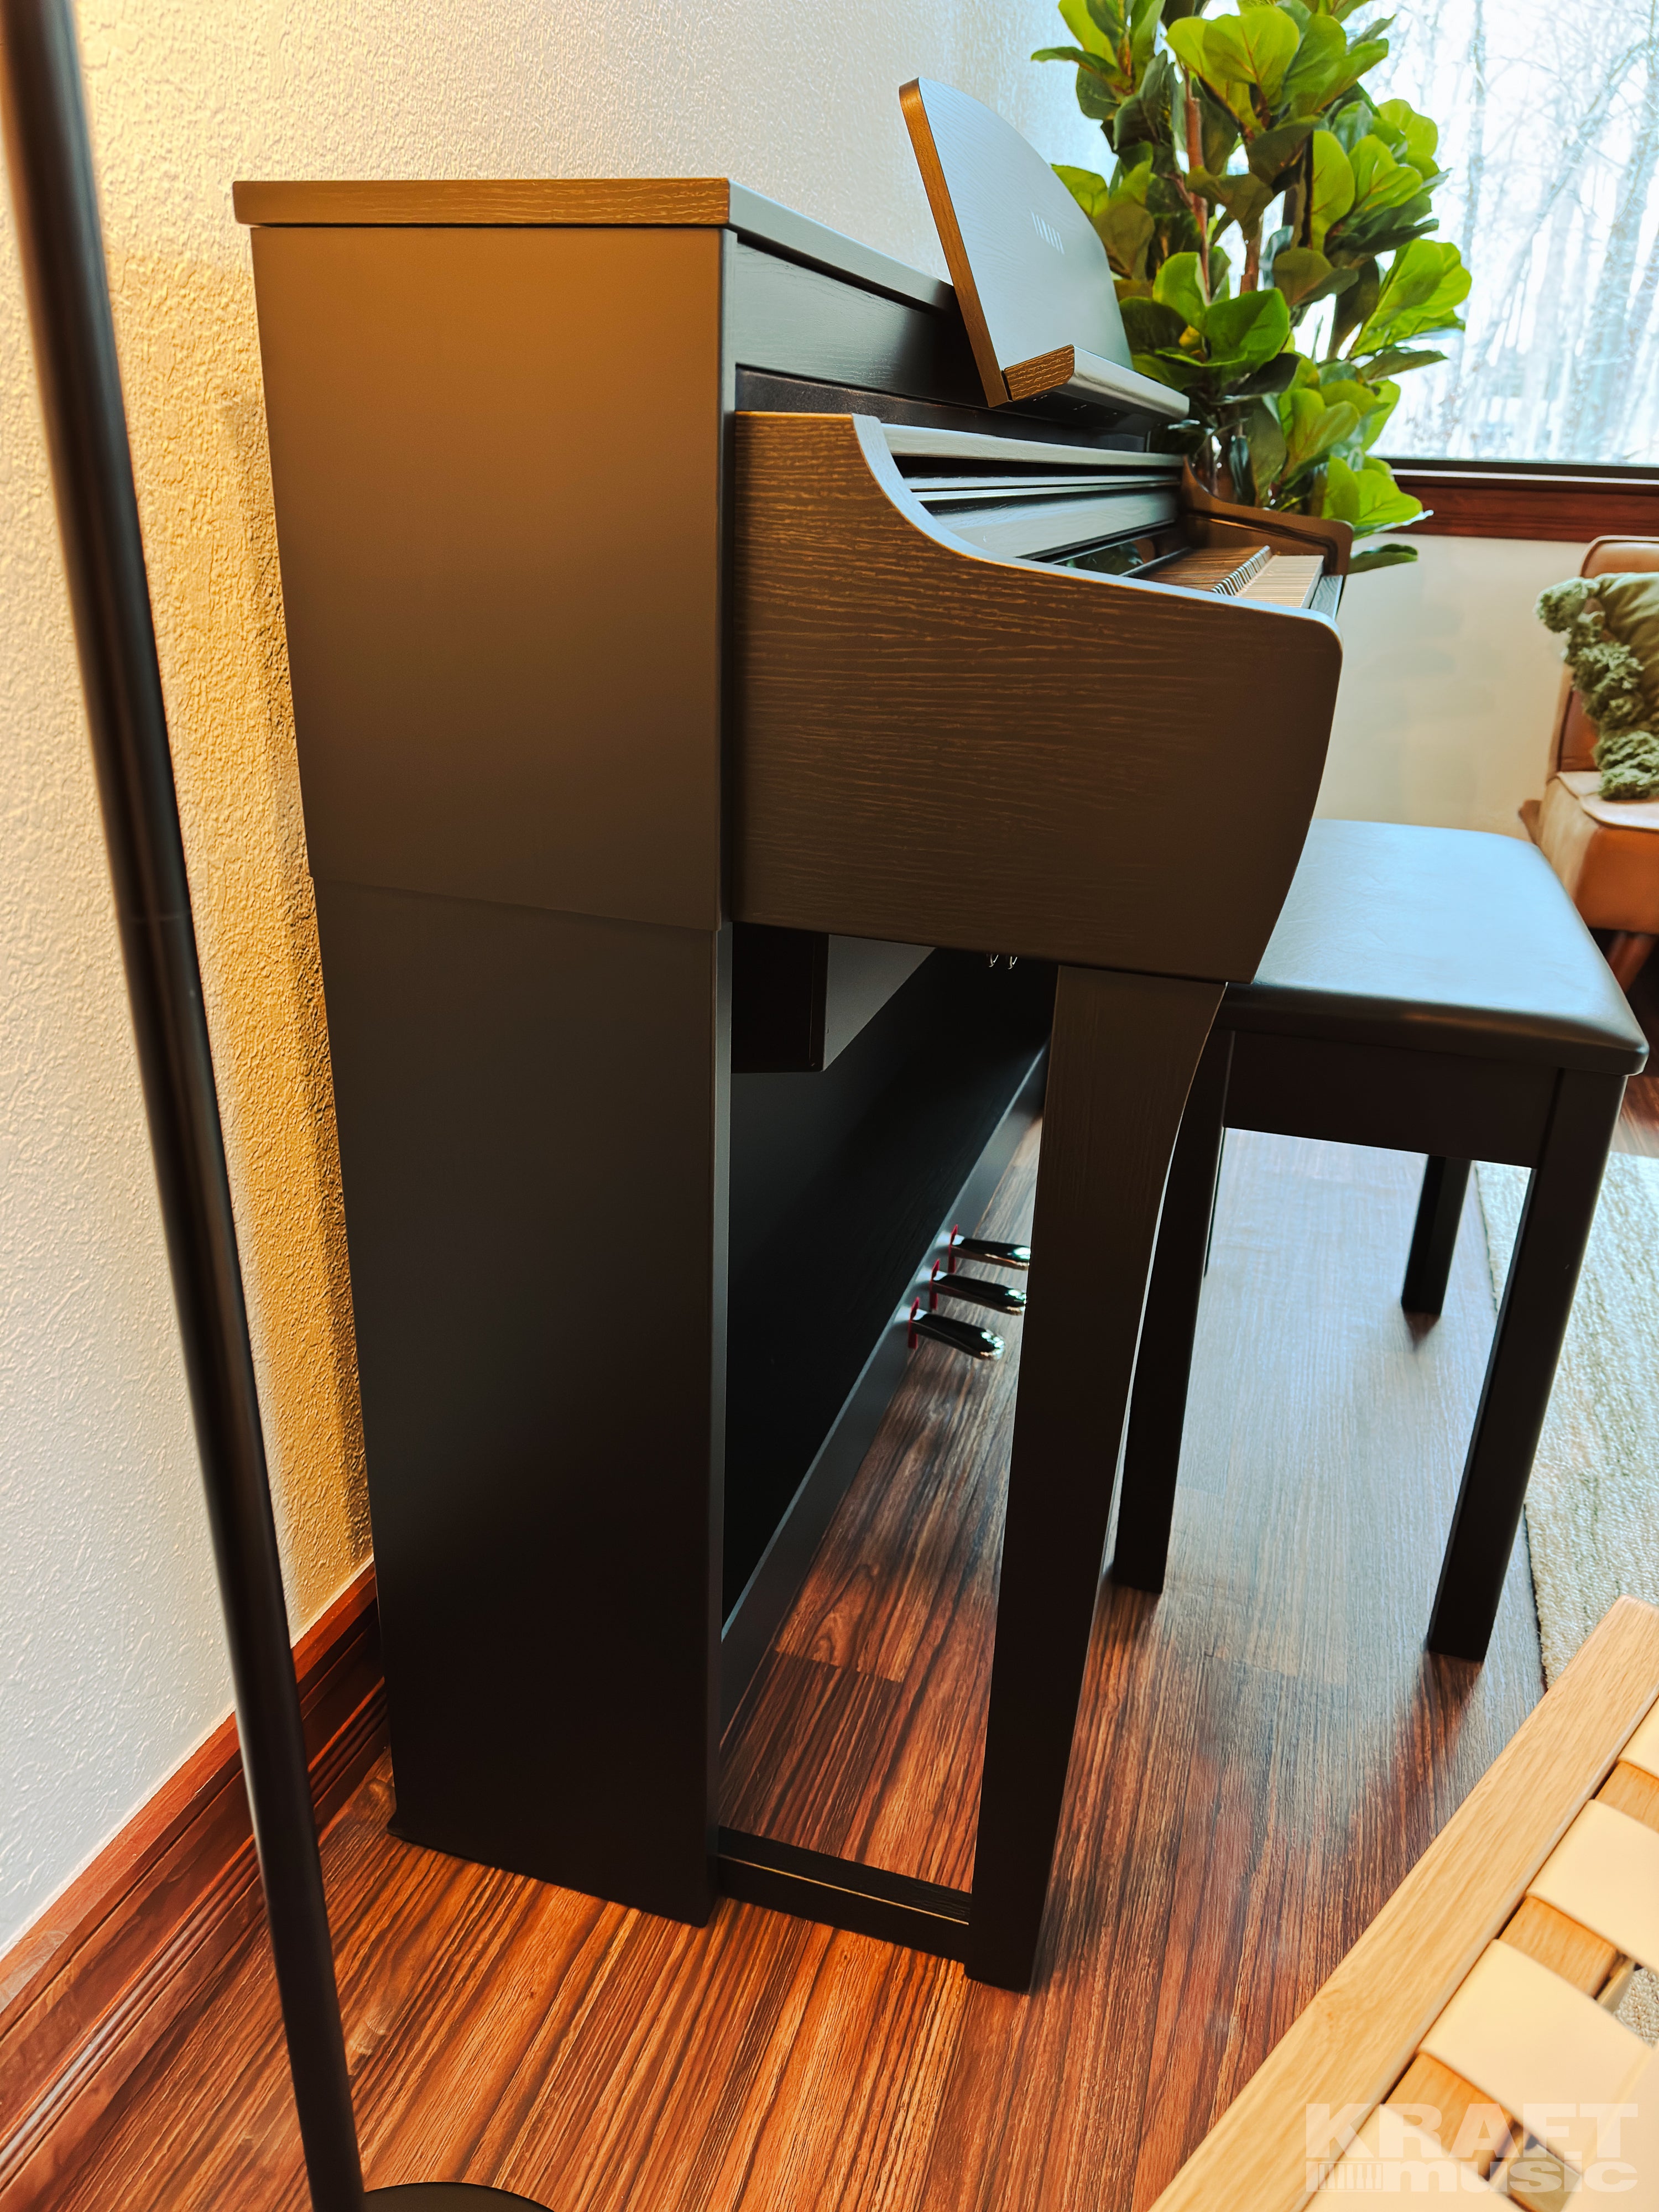 Yamaha Clavinova CSP-275 Digital Piano - Black Walnut - in a stylish living room side view